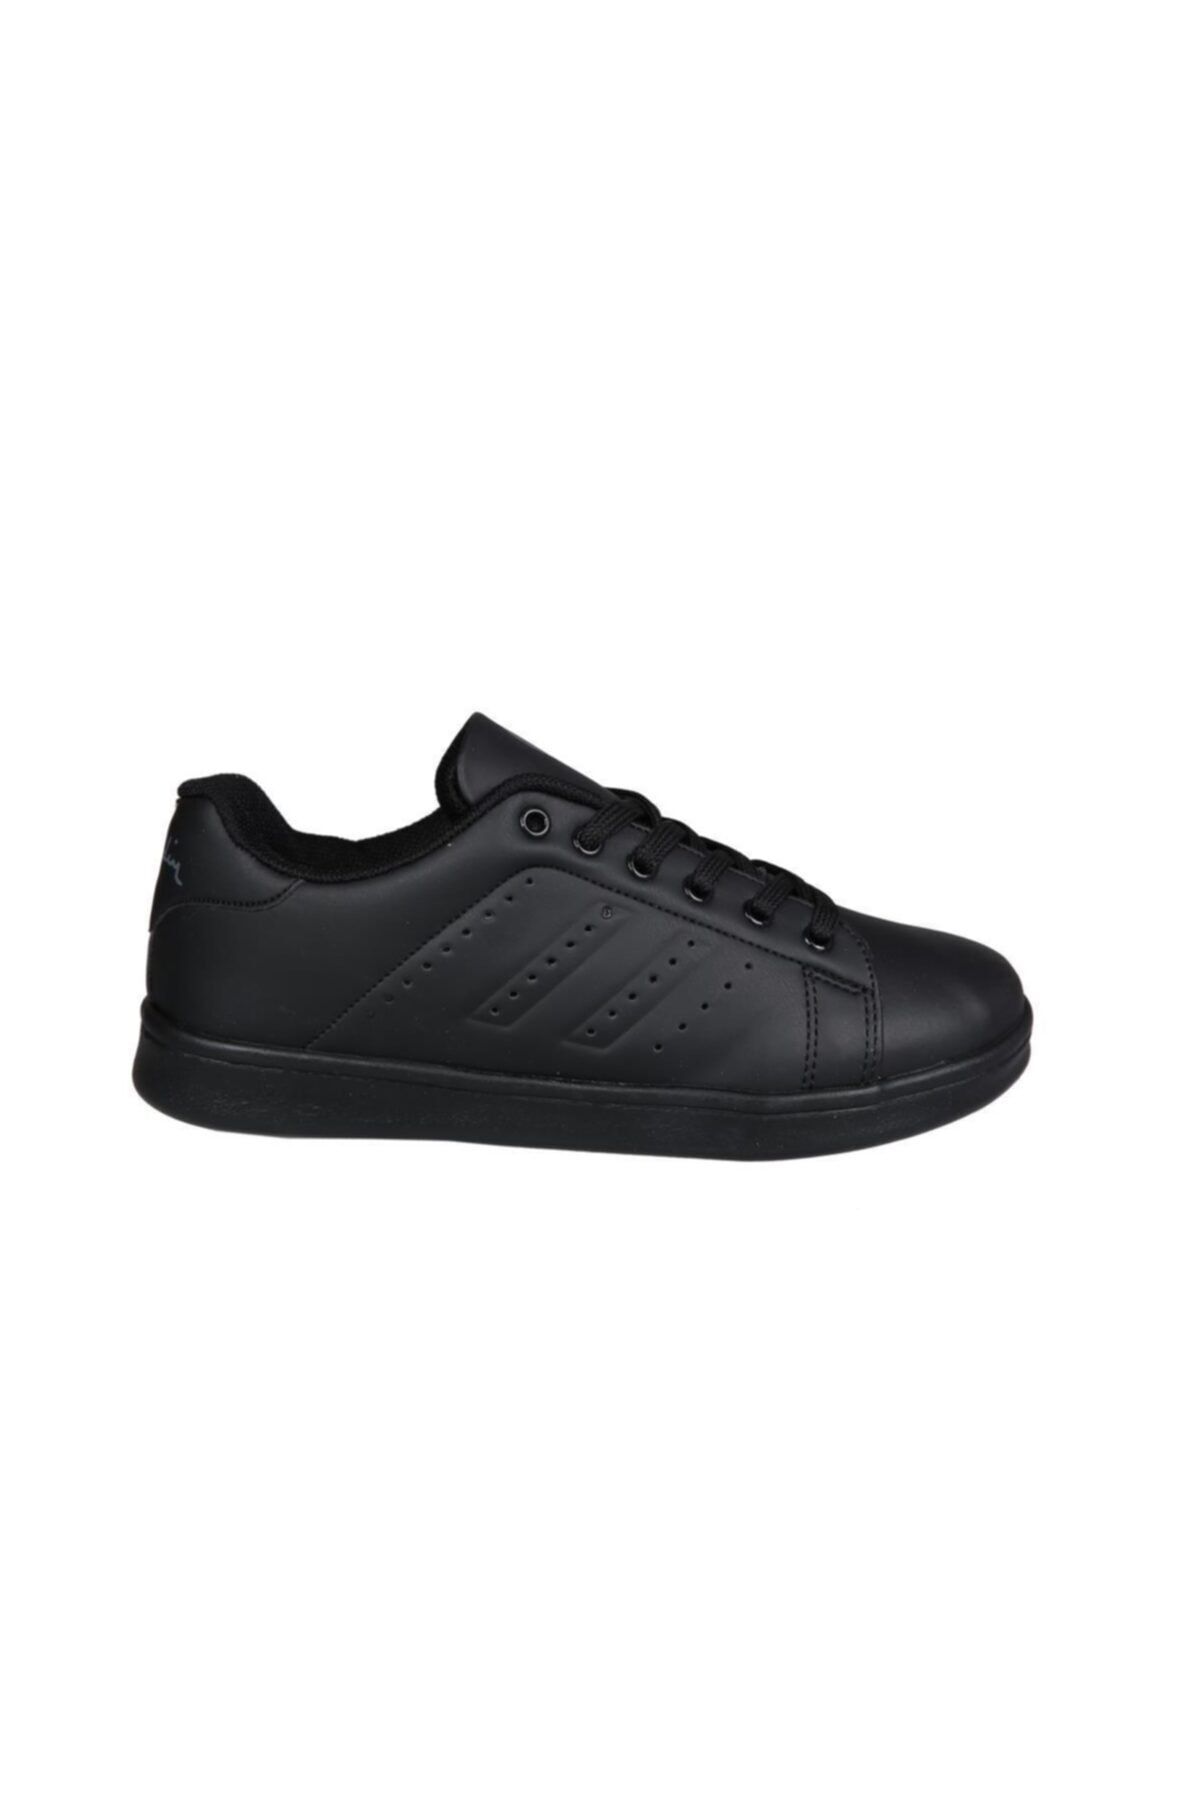 Pierre Cardin Siyah Unisex Sneakers Pcs-10144